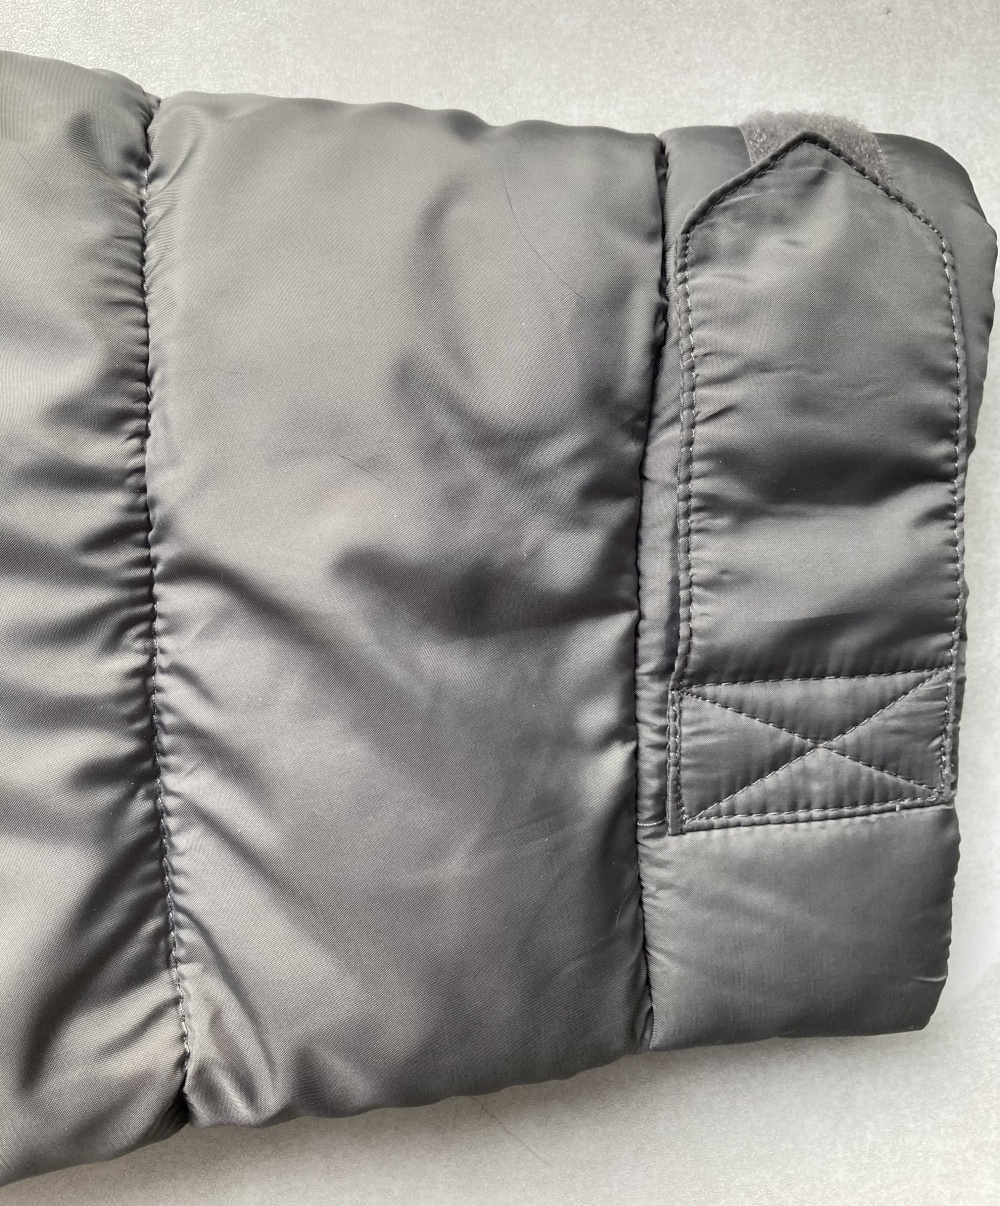 Утепленное пальто “ Aeropostale ”, 48-50 размер